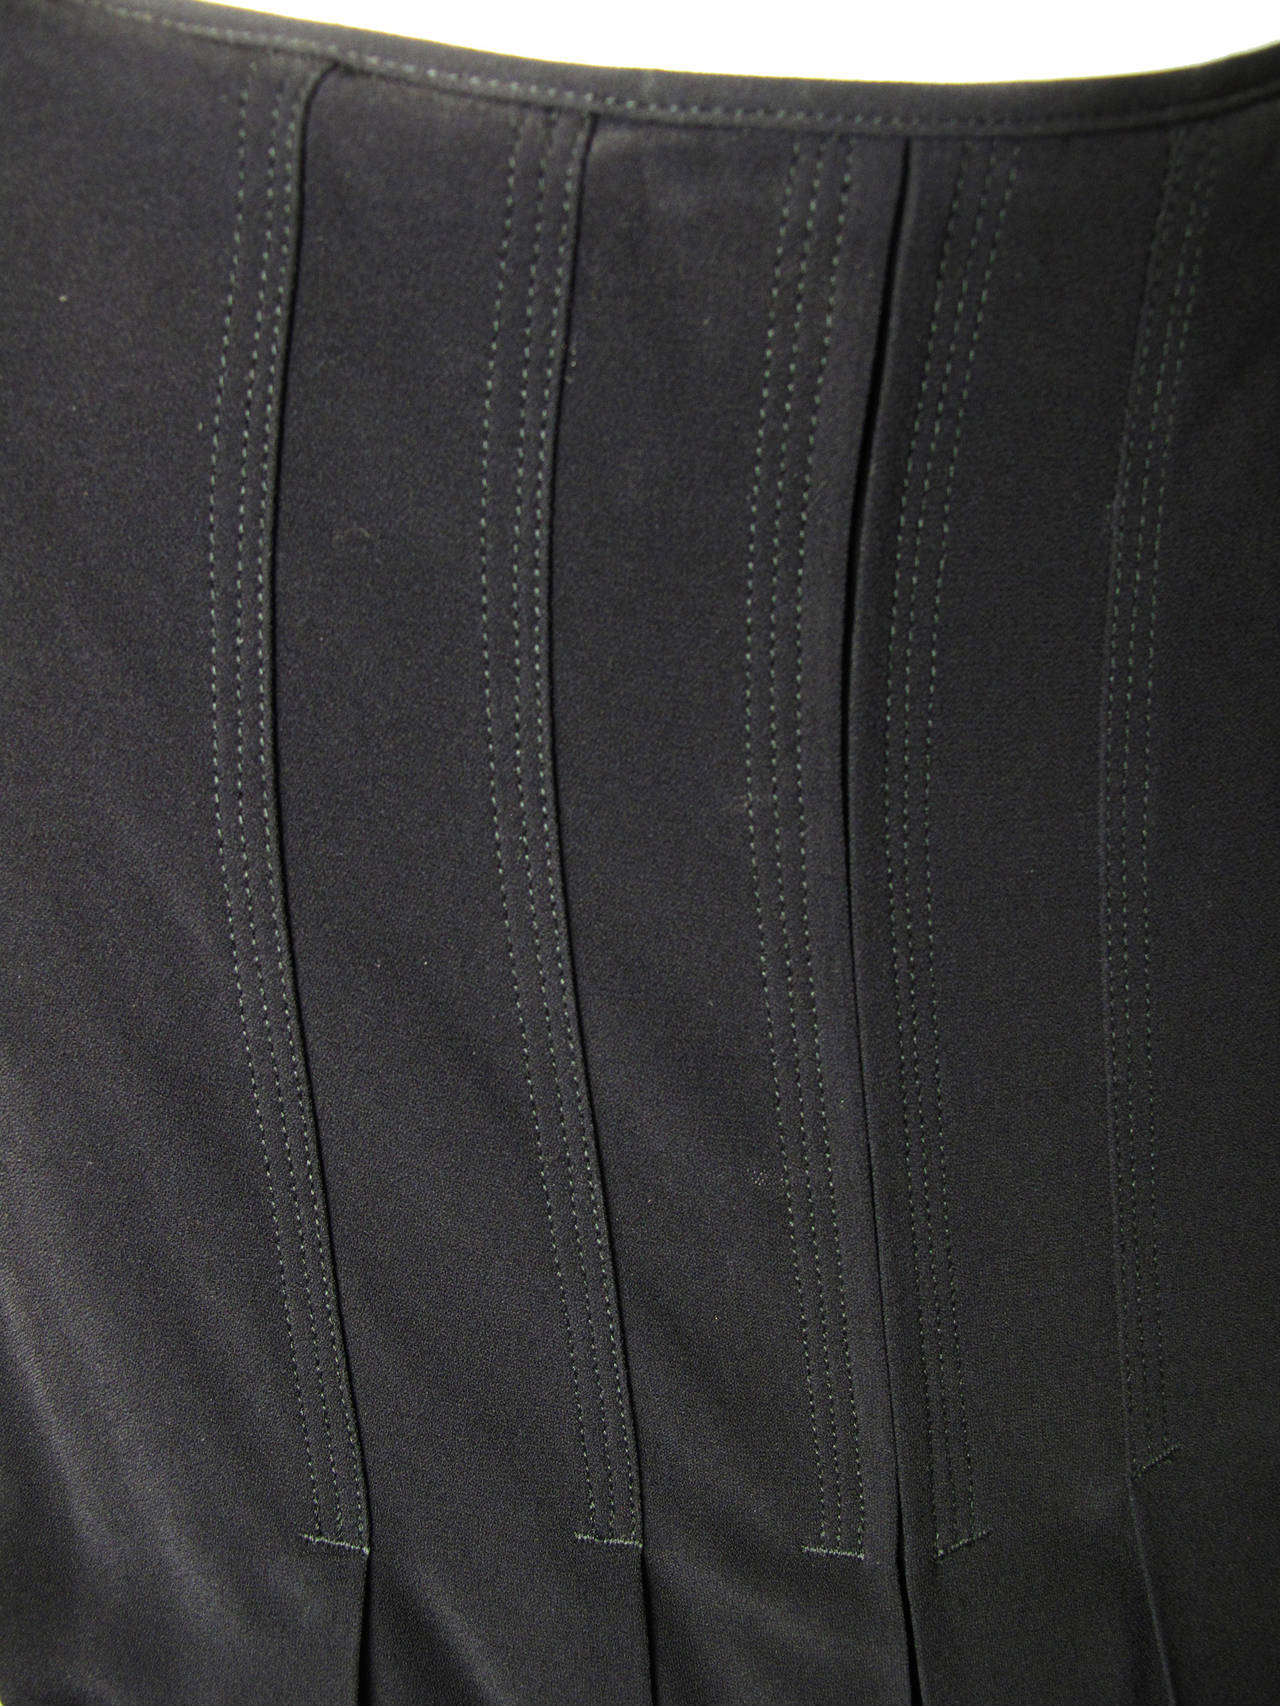 Jean Paul Gaultier black rayon, acetate pleated ankle length evening skirt. 28